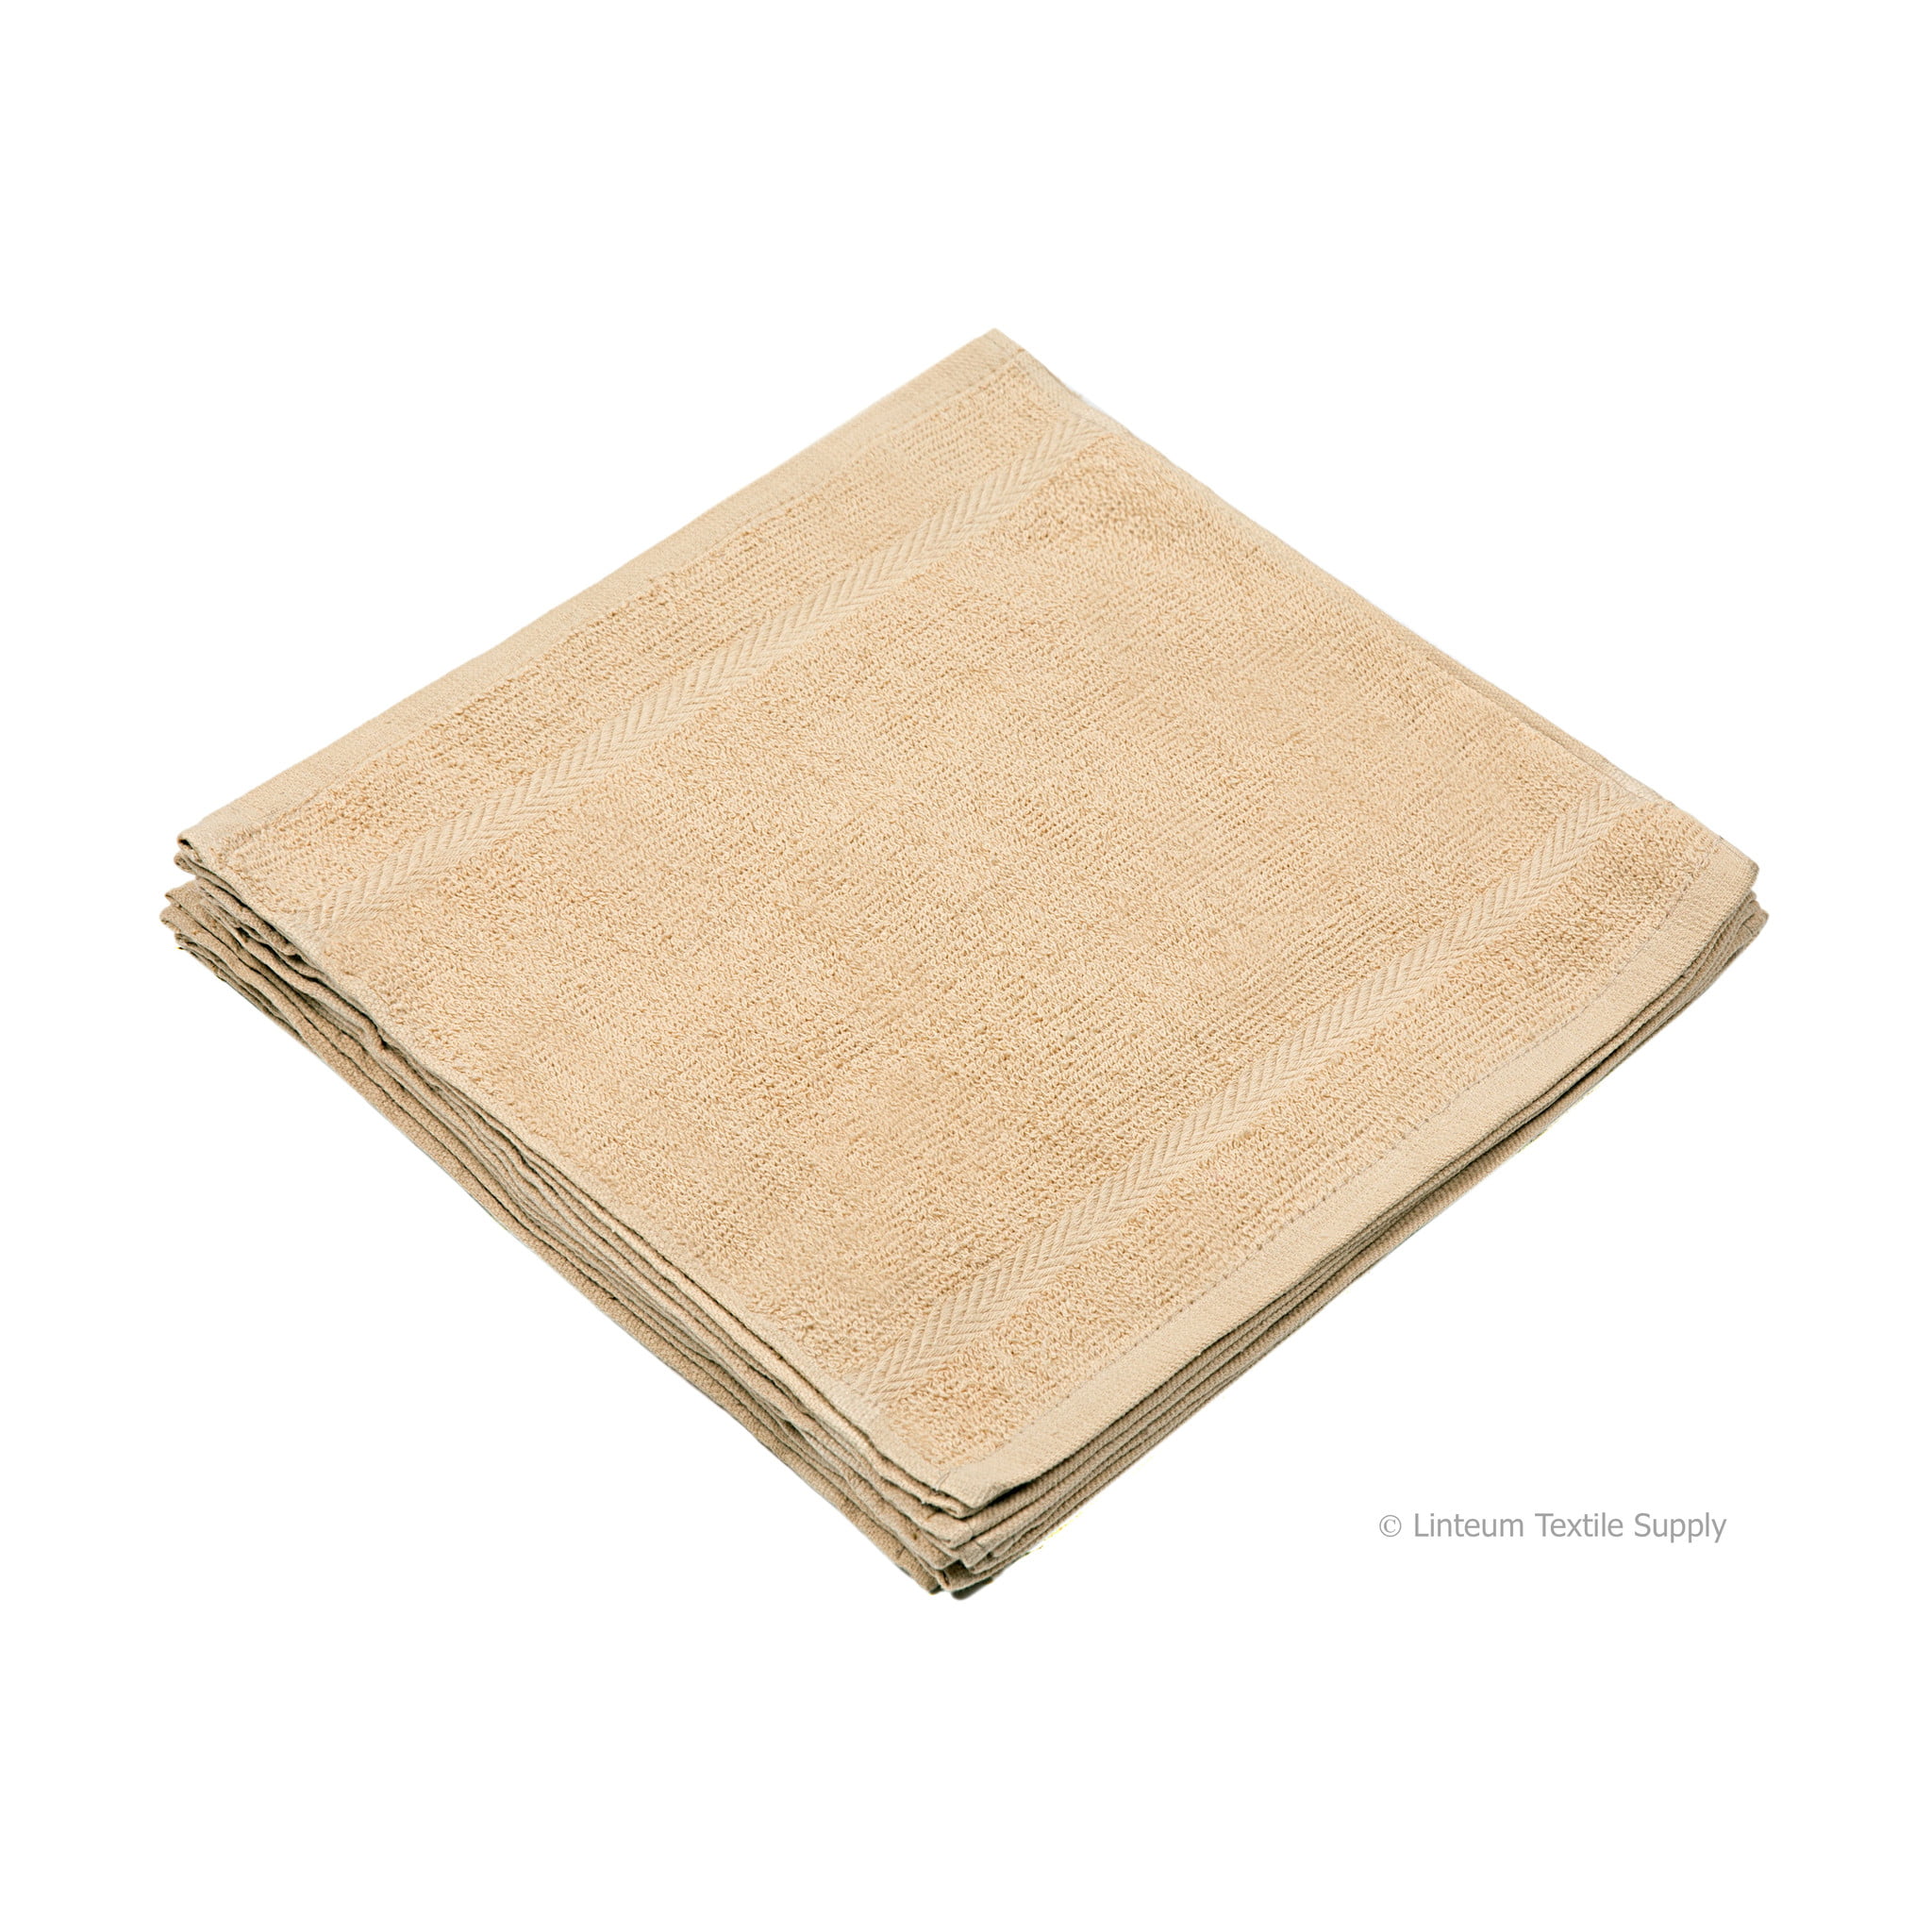 Linteum Textile 100% Soft Cotton 12-Pack, 12x12 in WASHCLOTHS Face Towels